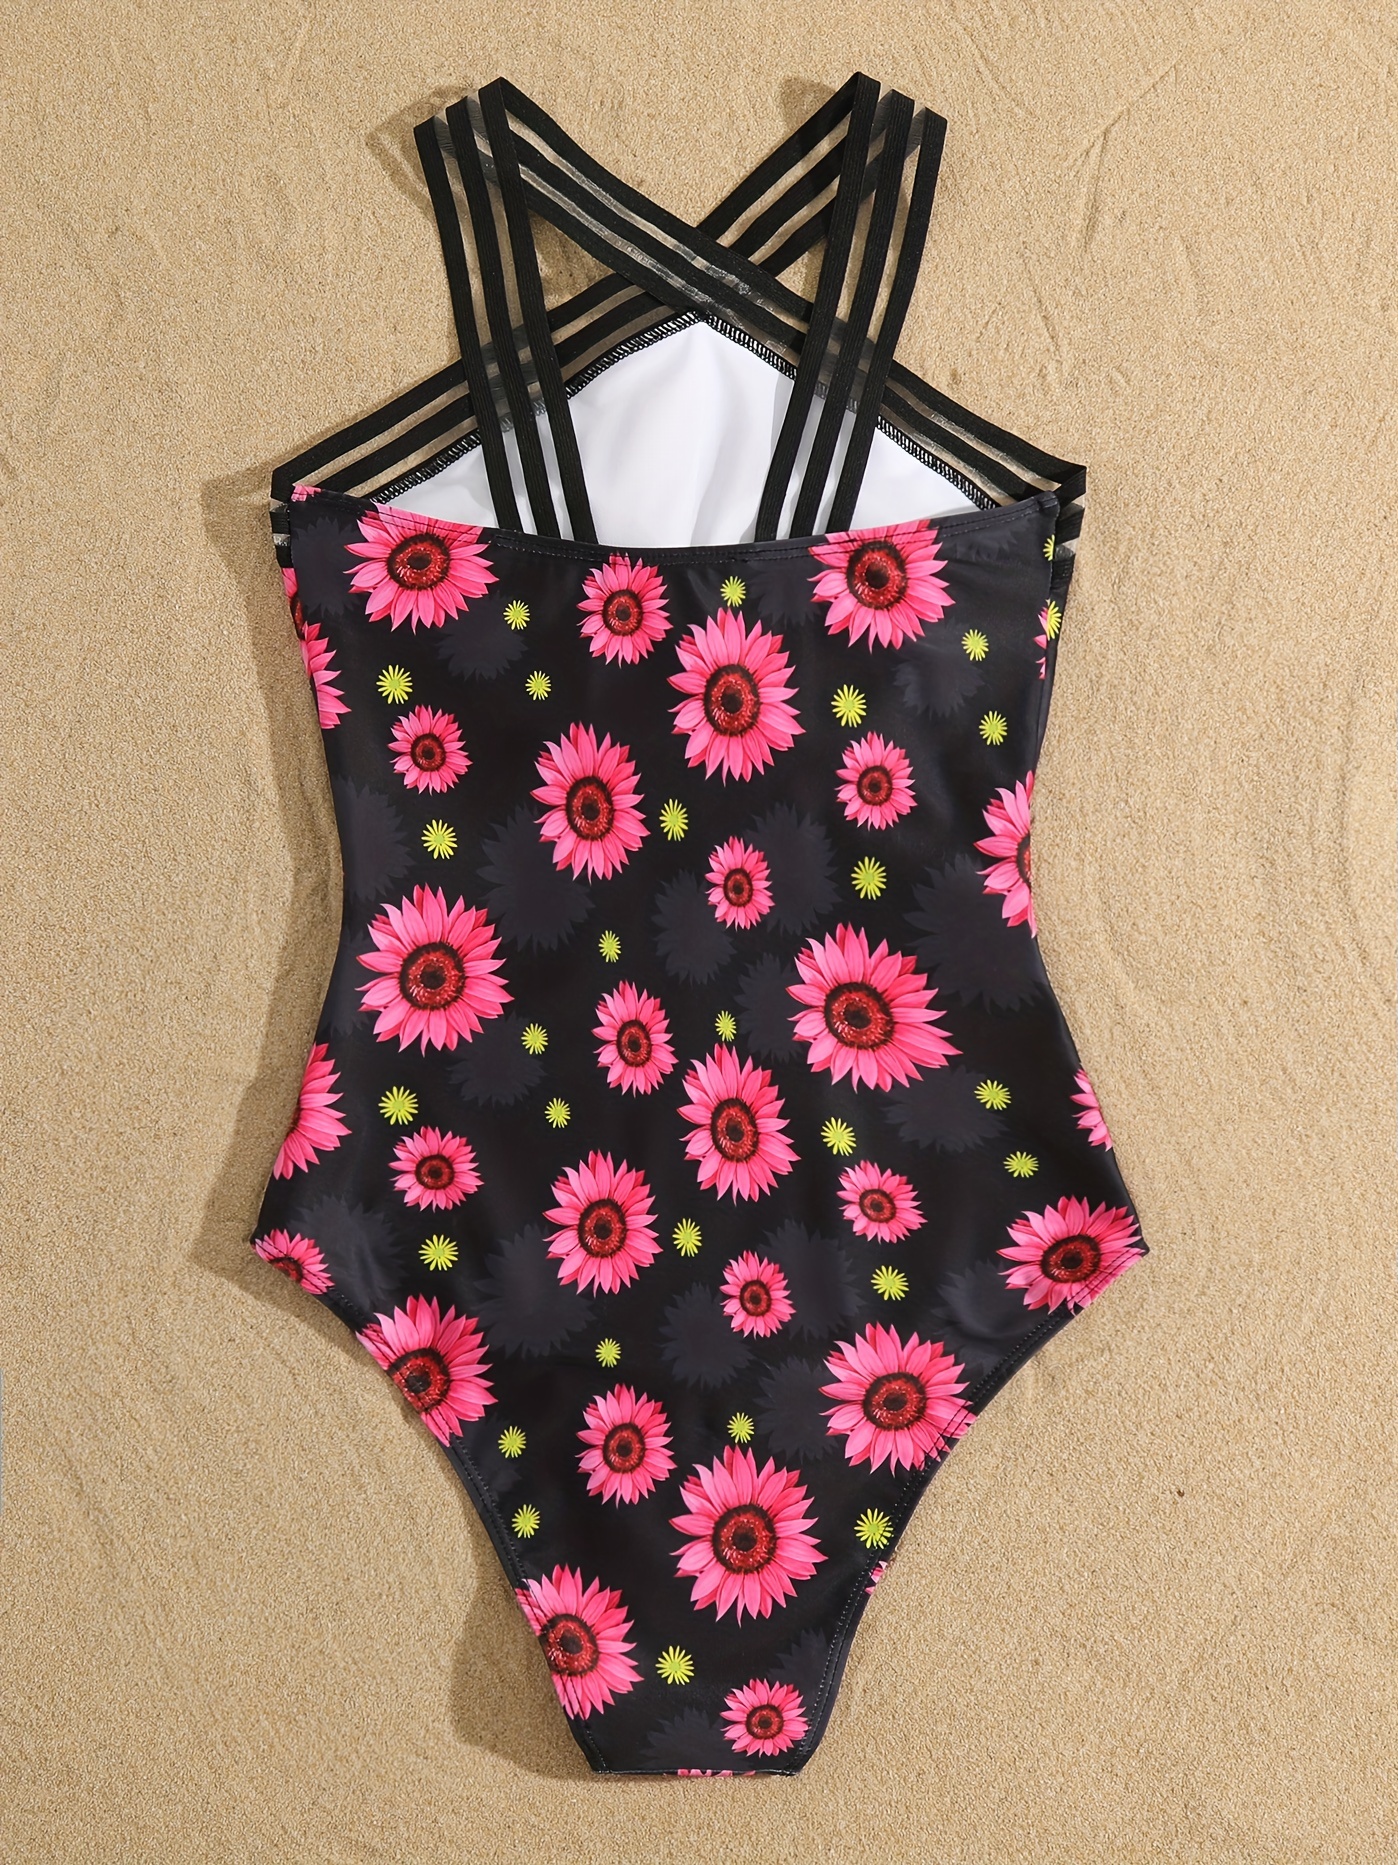 Kids Girls Sunflower Swimwear One Piece Floral Bathing Suit Beach